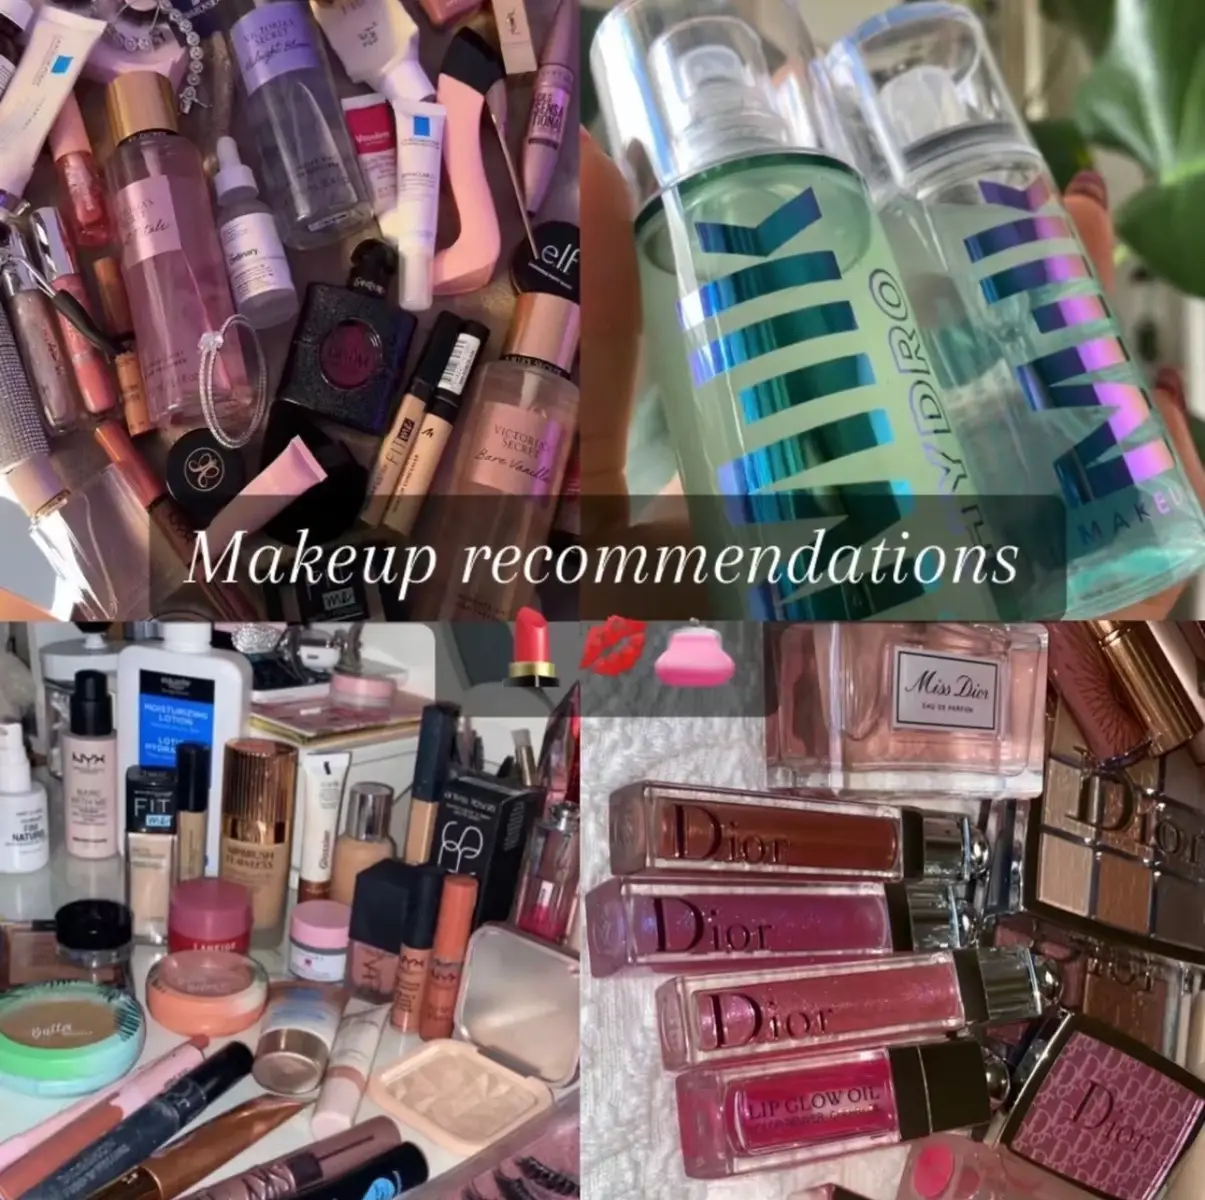 #makeuphaul #makeuprecomendation #MakeupRoutine #makeupproducts #makeuptips #makeuptiktok #primer #foundation #concealer #browgelhack  #settingpowder #tipsforgirls #blowthisup #fypviralシ 